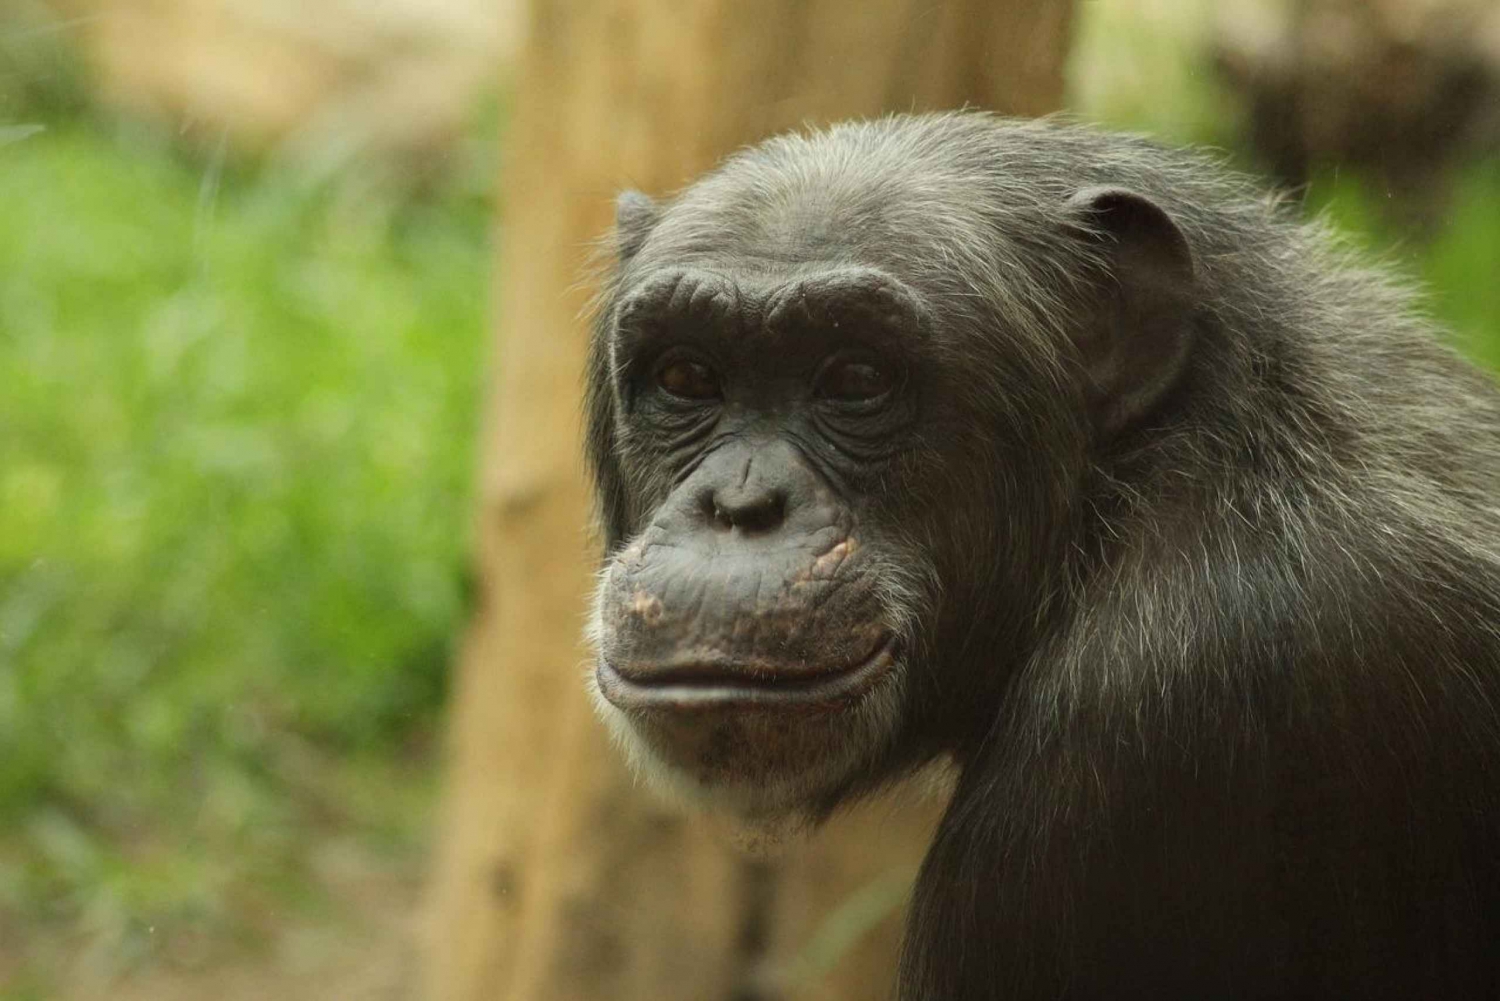 5-DAGEN Beste chimpanseesafari in Gombe Np Tanzania.